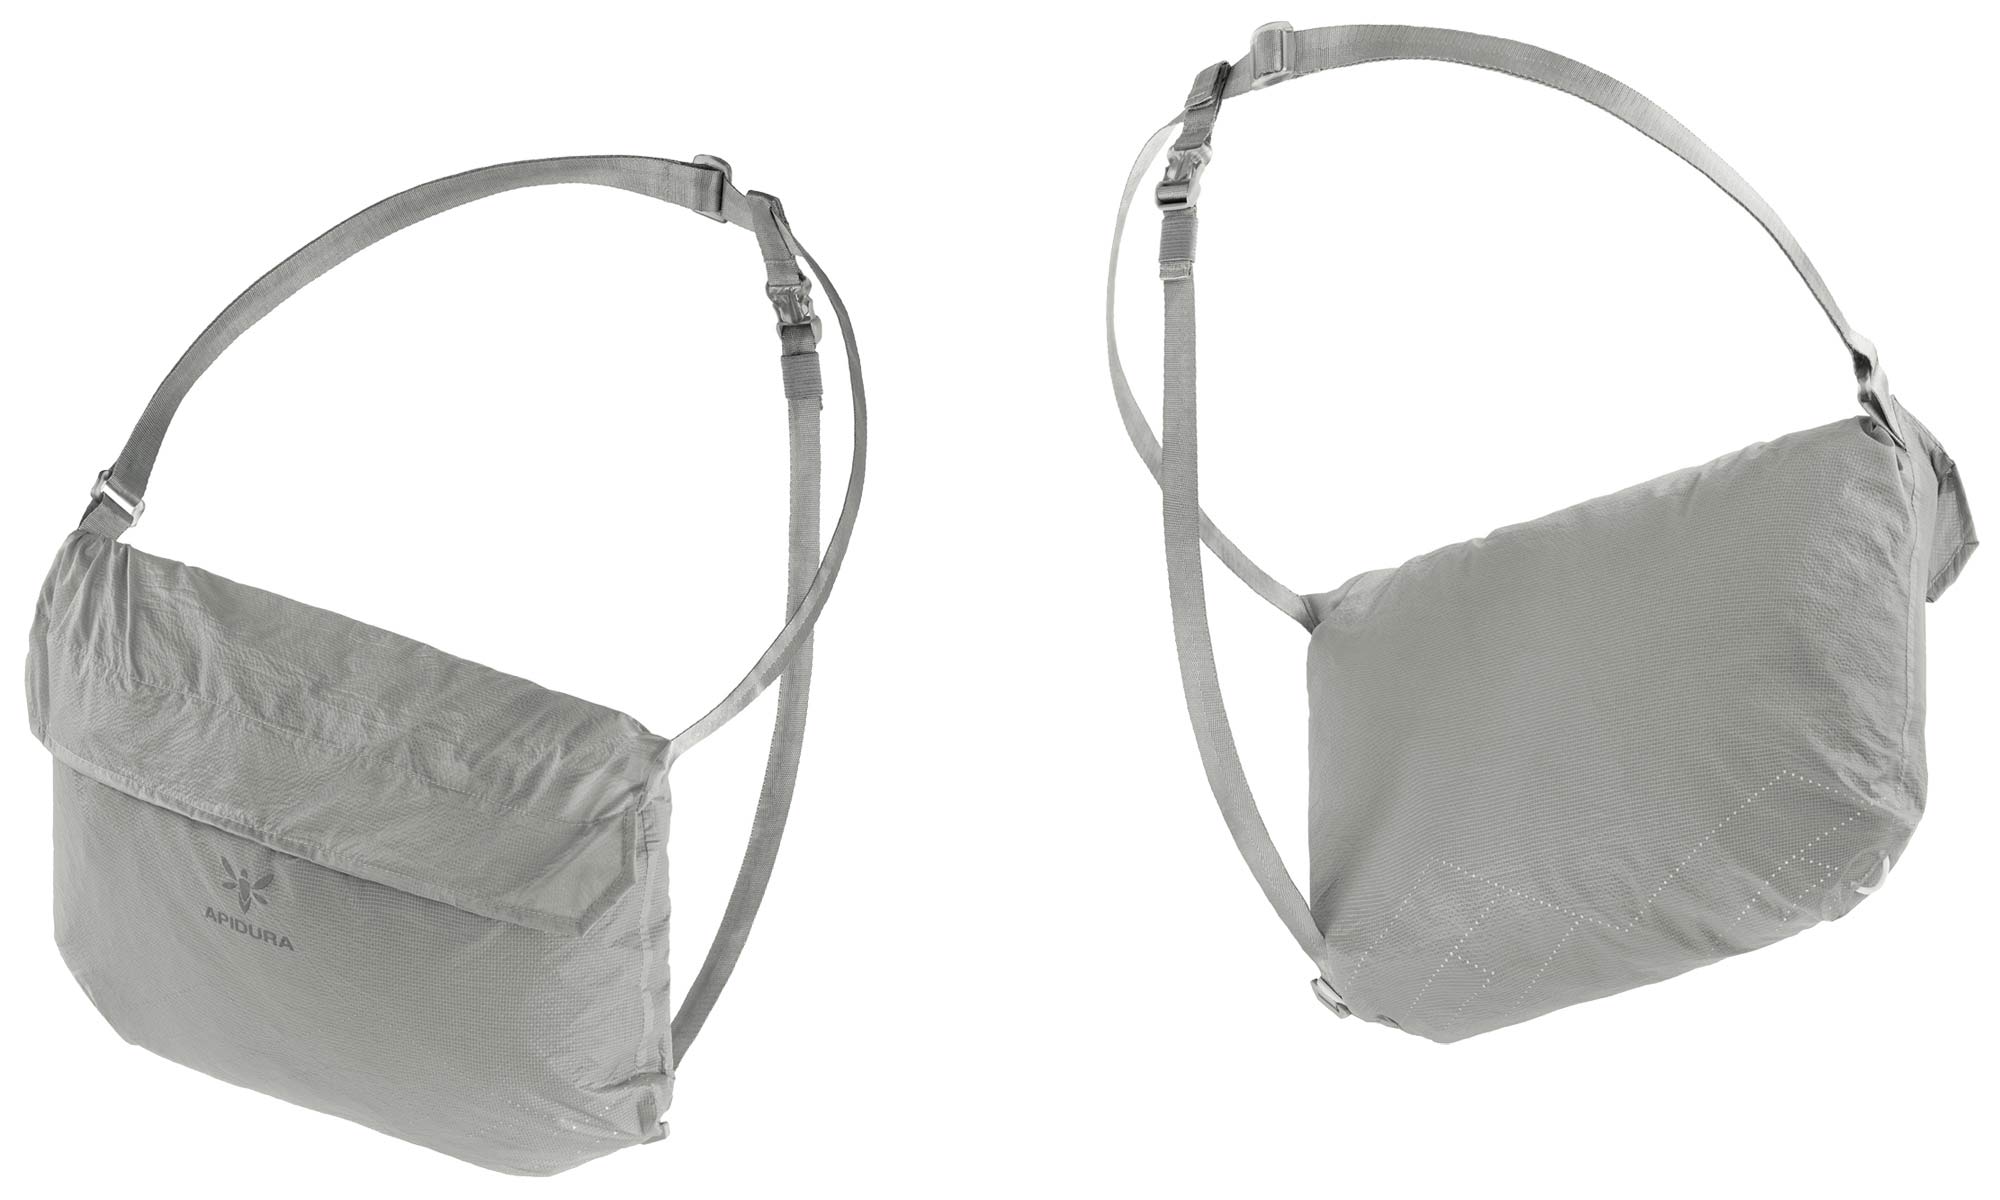 Apidura Packable Backpack Packable Musette light on-body bags, lightweight waterproof packables haul extra capacity bikepacking adventure packs